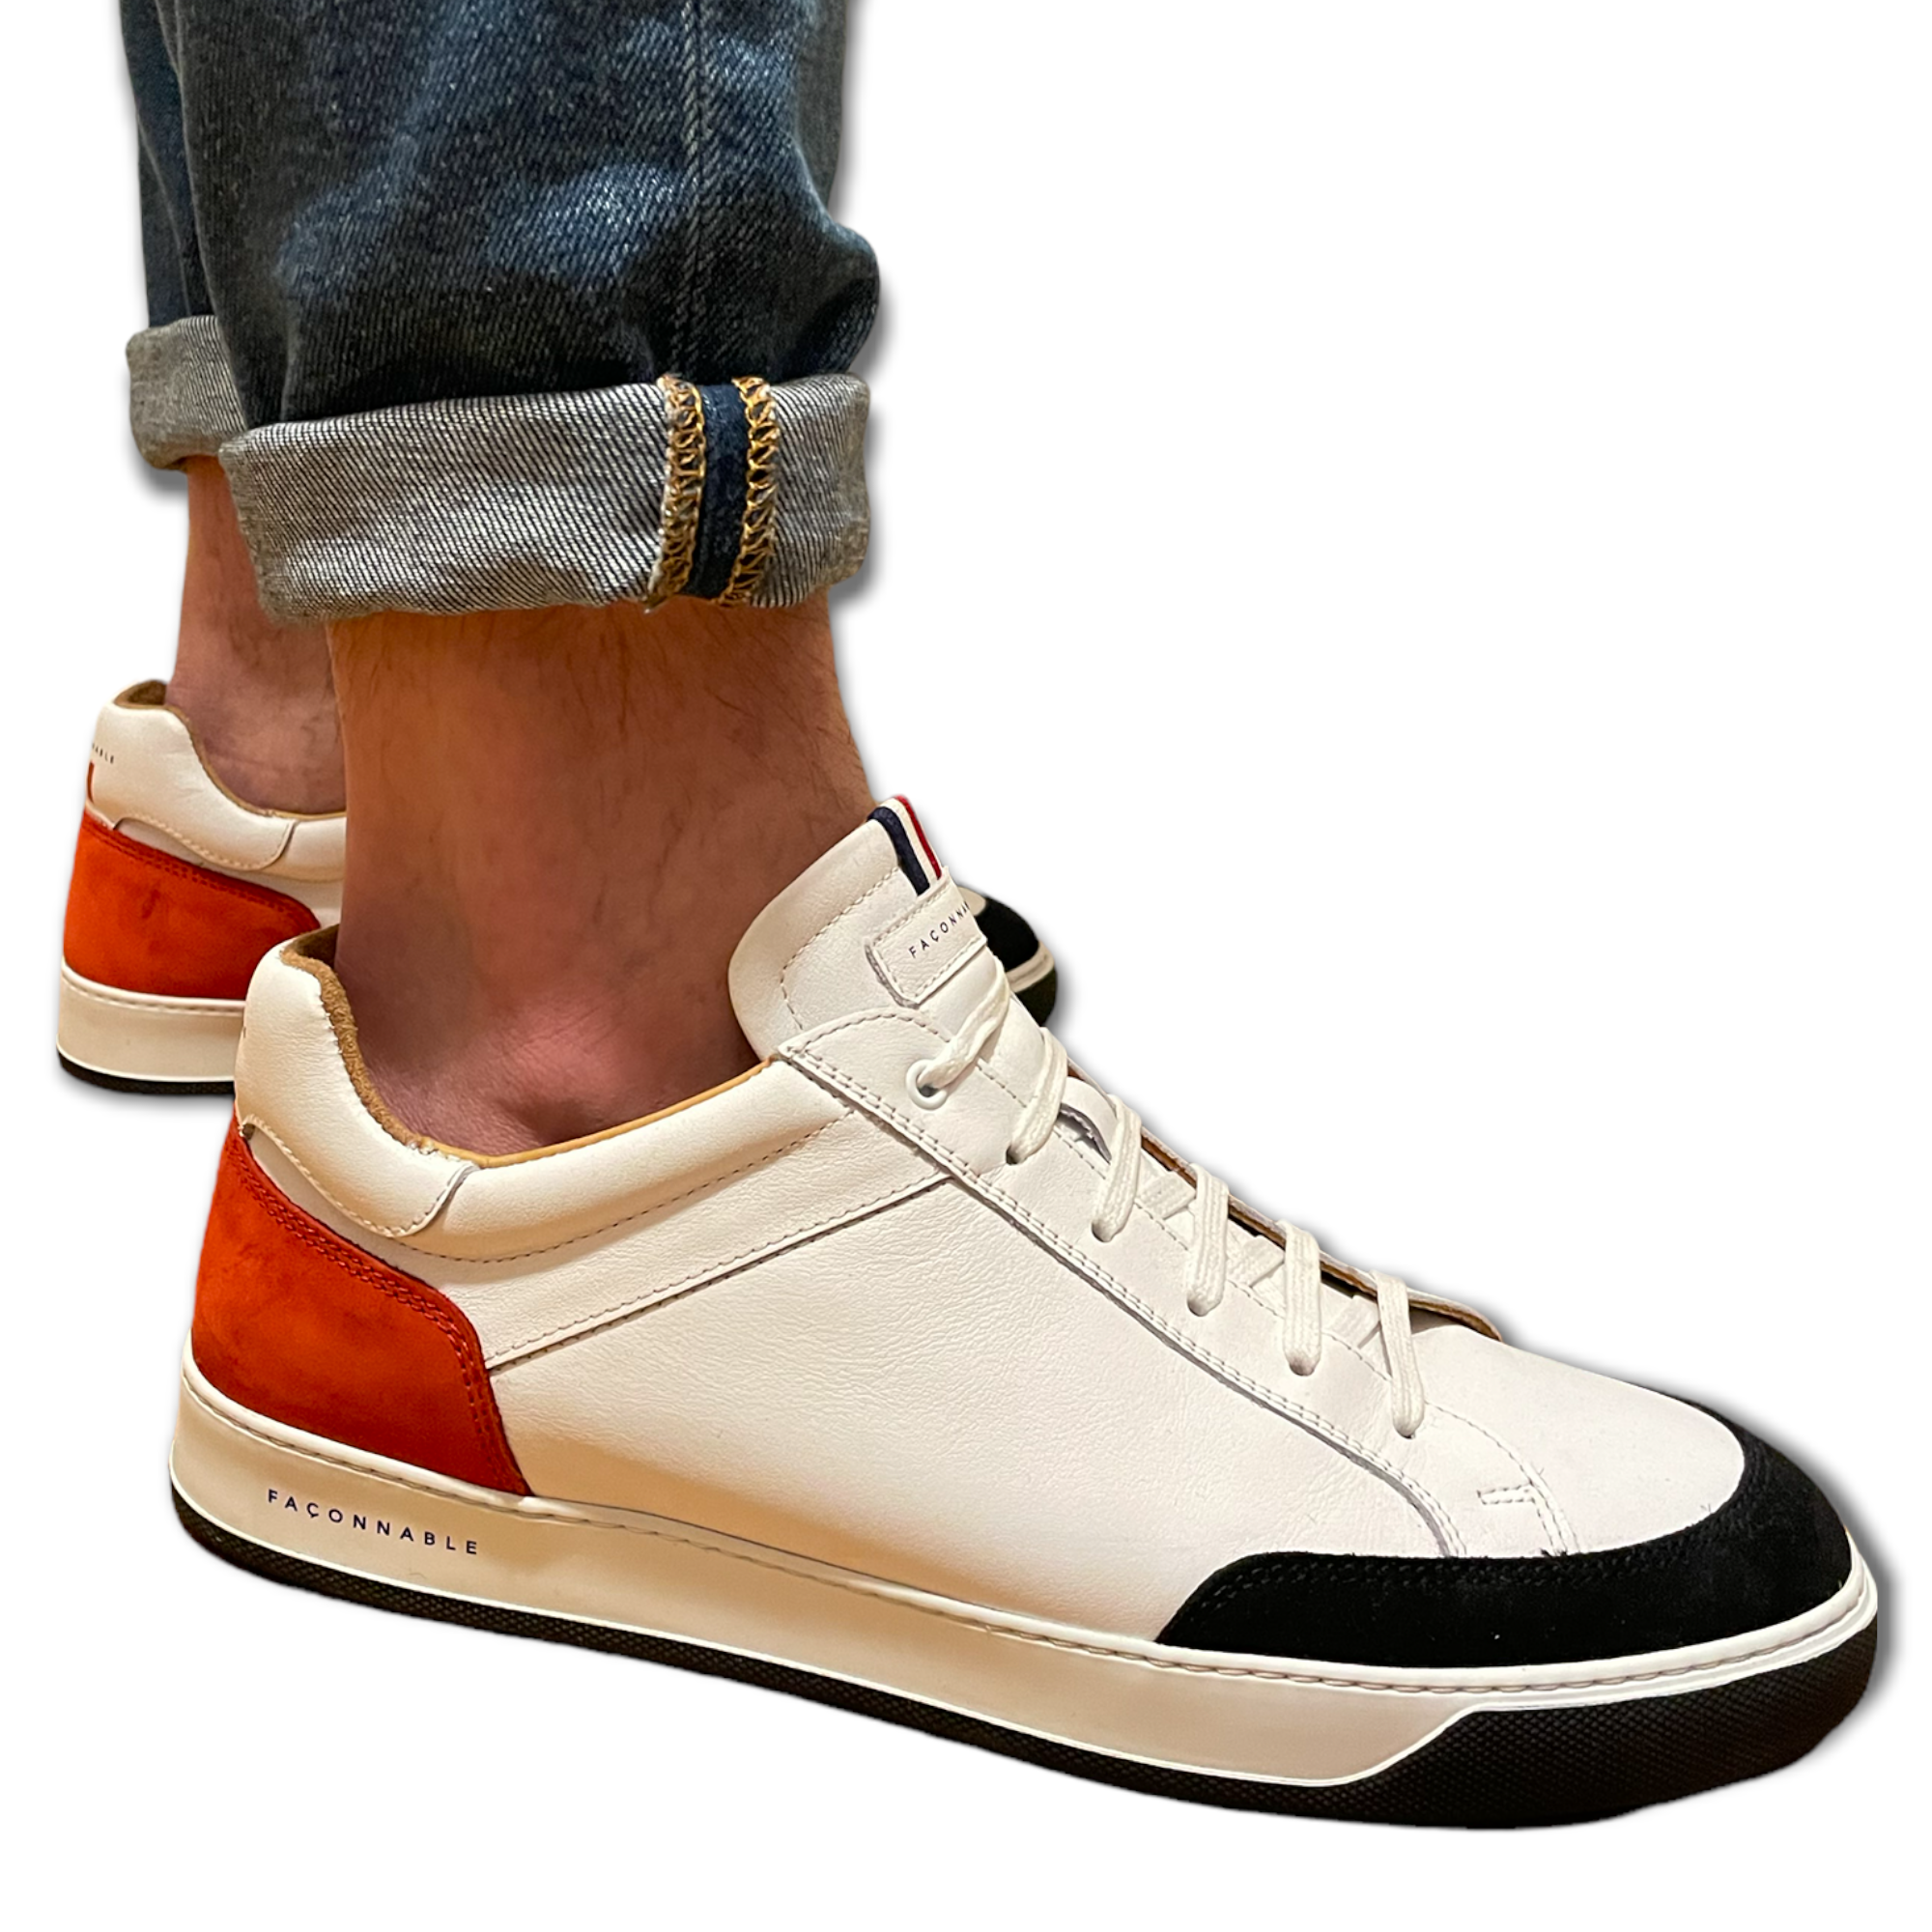 Men’s FACCONABLE Sneakers |Size: 45.5|